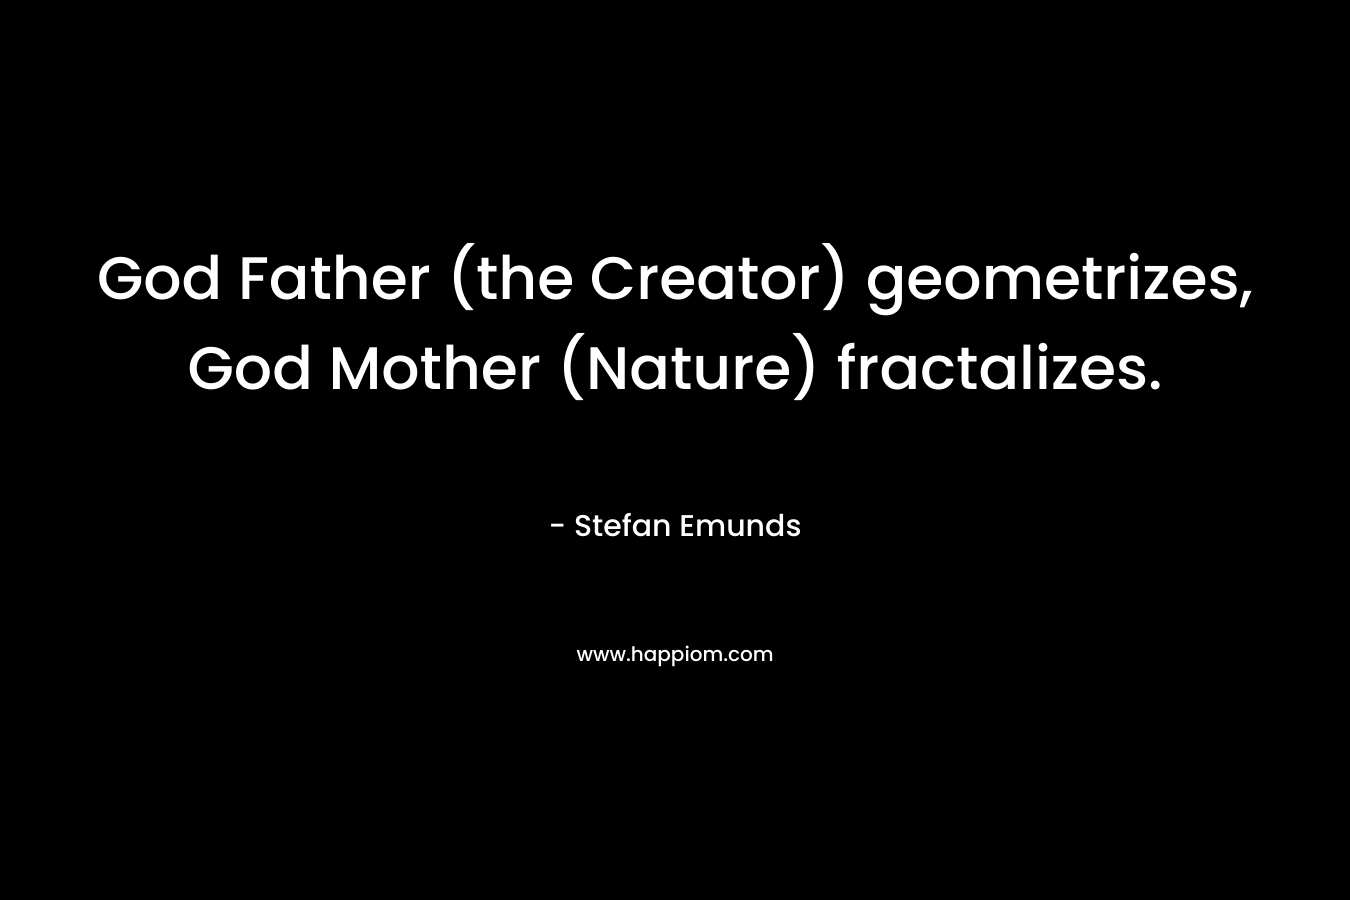 God Father (the Creator) geometrizes, God Mother (Nature) fractalizes.